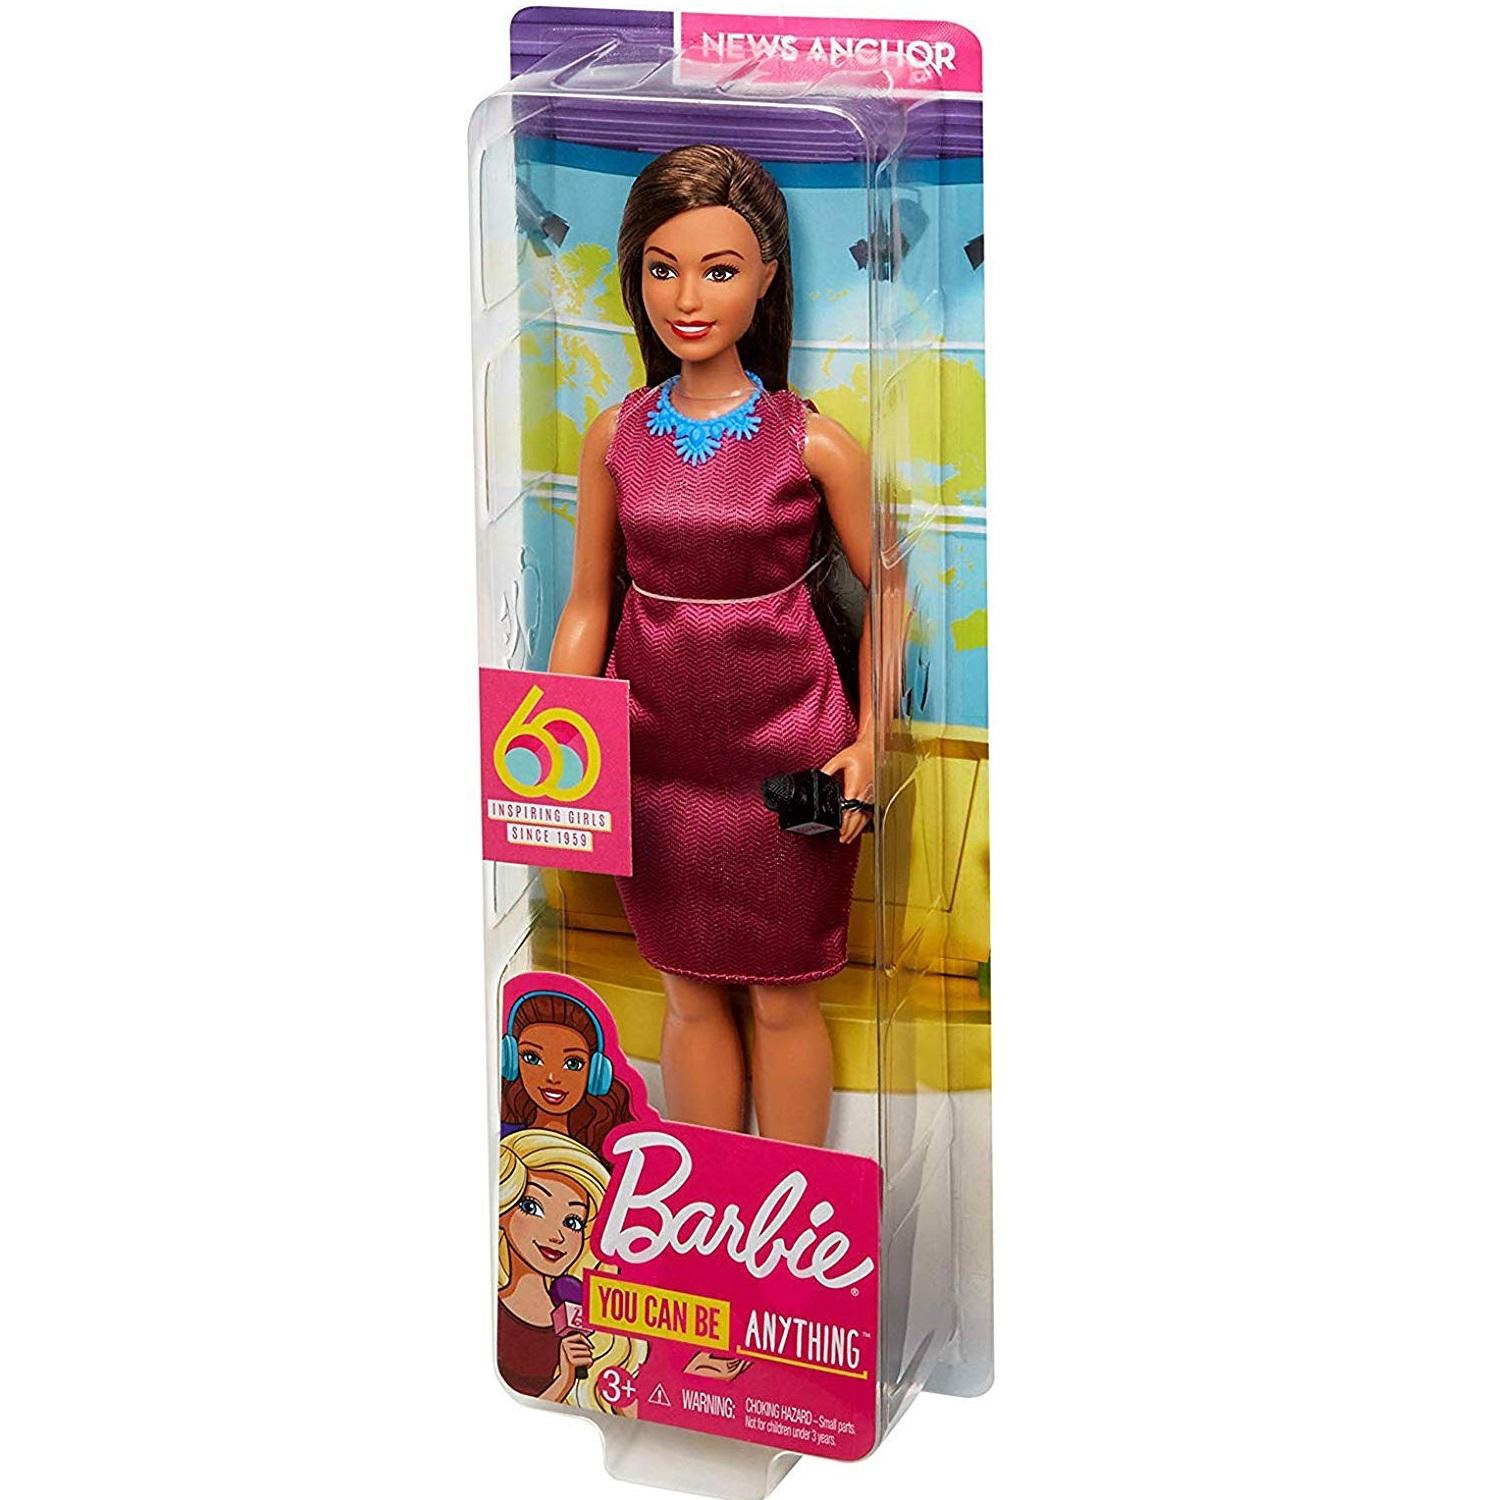 Barbie 60th Anniversary News Anchor Career Doll4